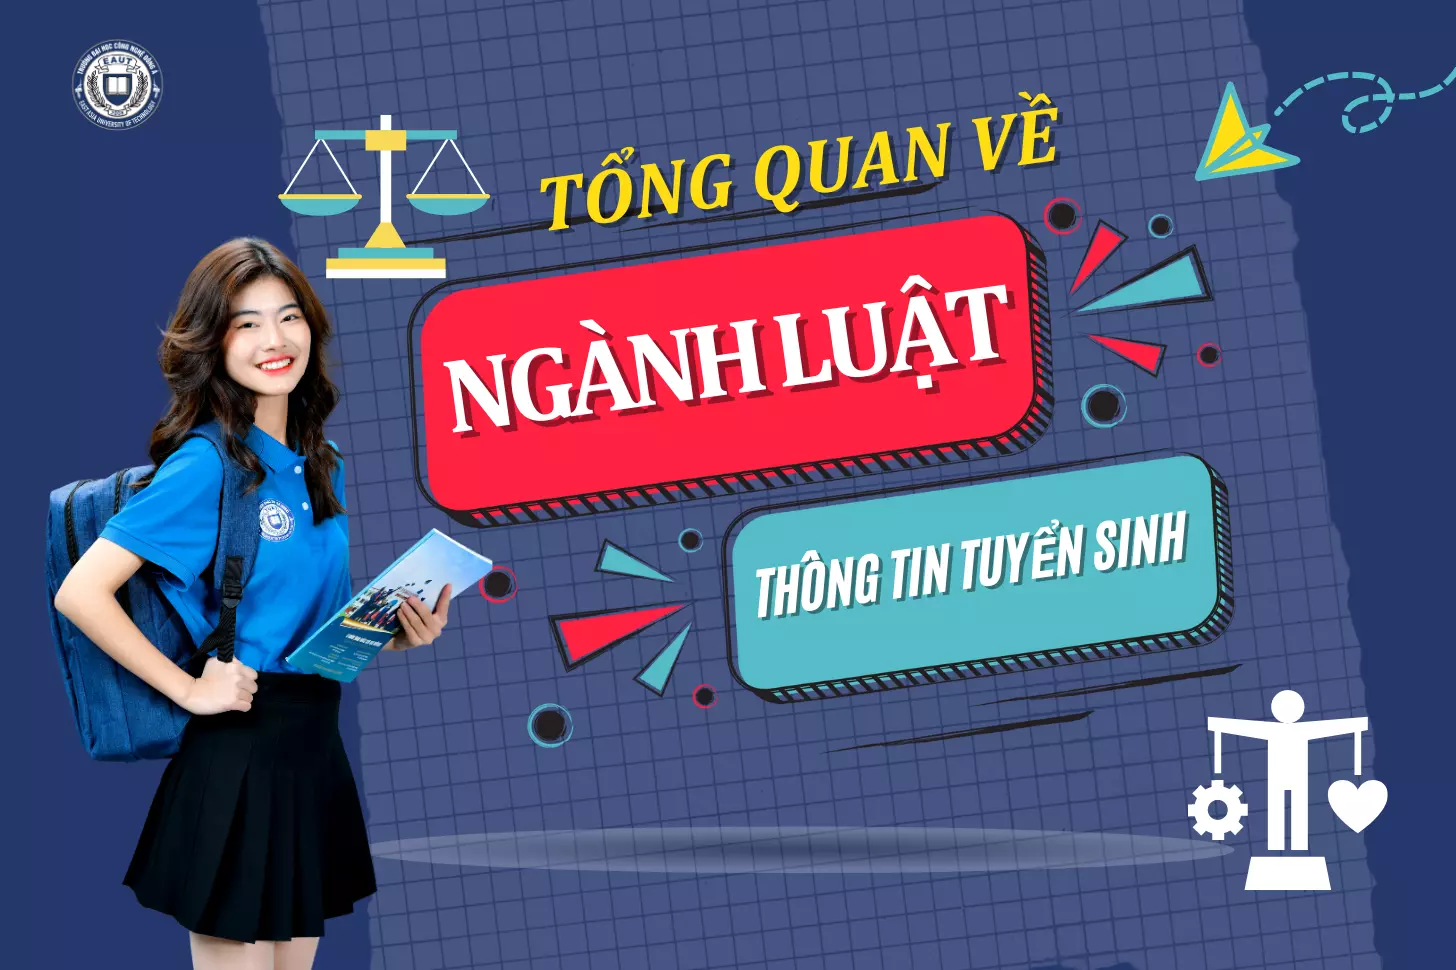 AnyConv.com Tong quan ve nganh luat truong Dai hoc Cong nghe Dong A 1